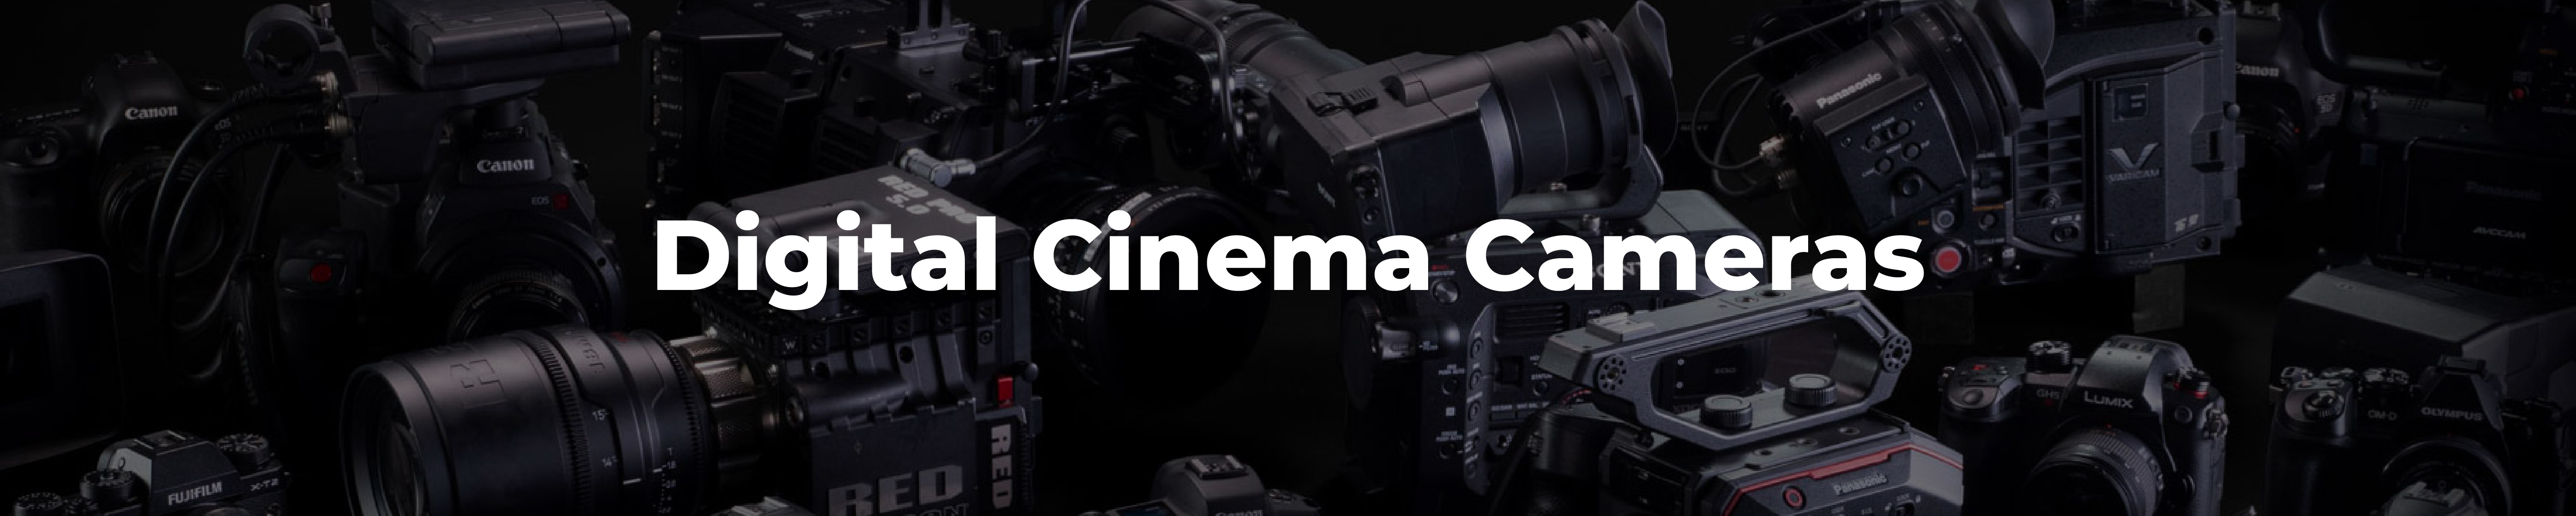 Digital Cinema Cameras